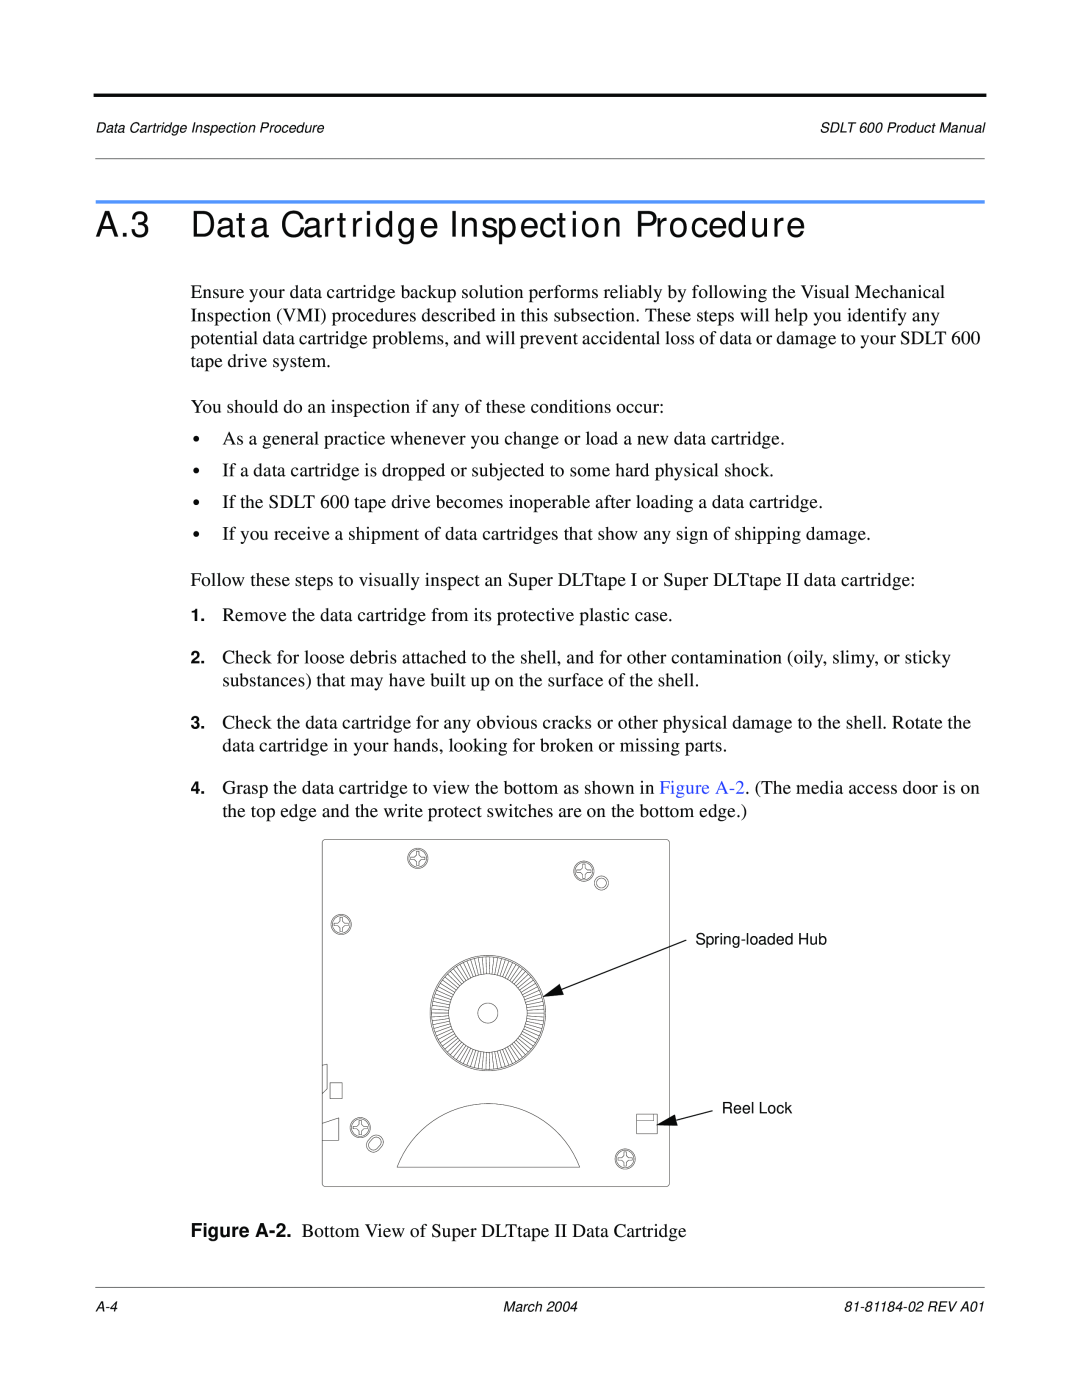 Tandberg Data 600 manual A.3 Data Cartridge Inspection Procedure 